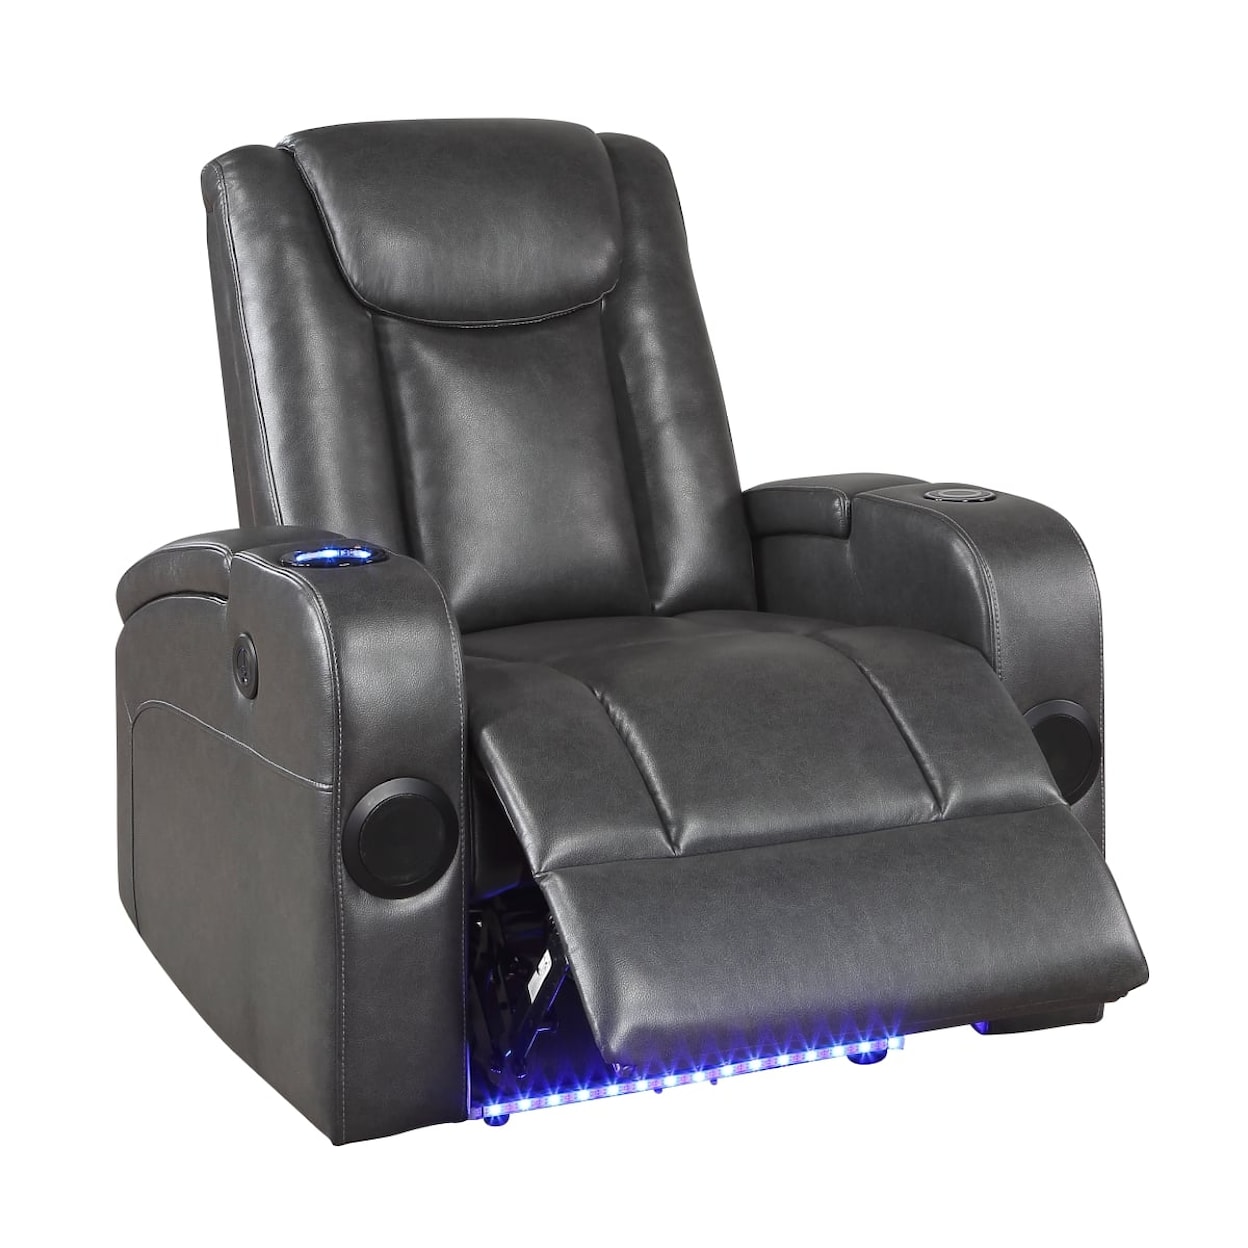 Homelegance Turbo Power Reclining Chair